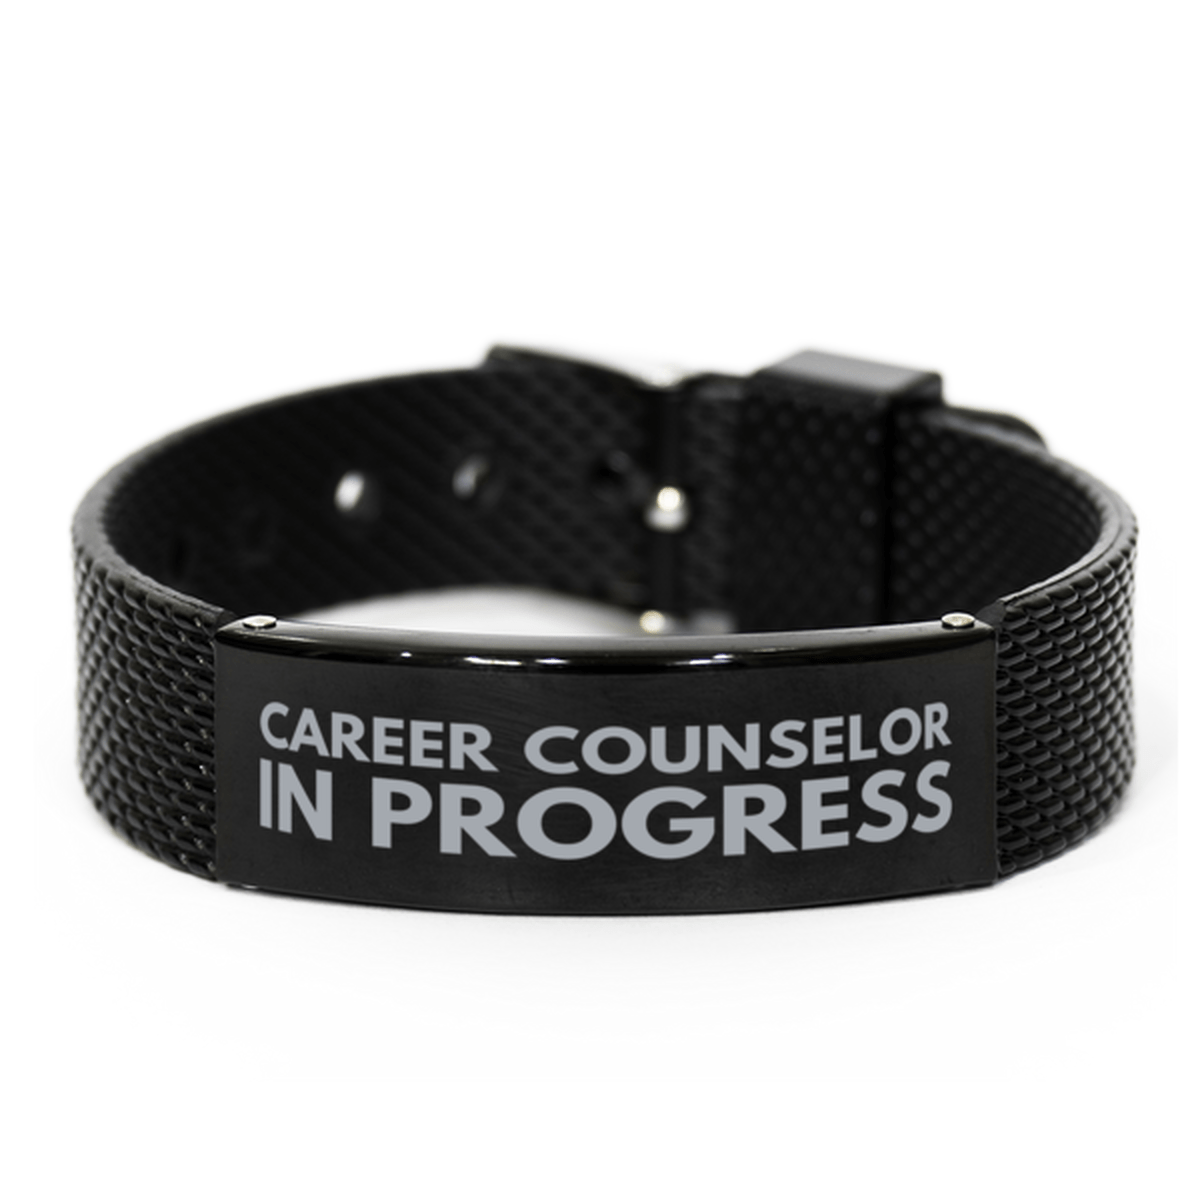 Inspirational Career Counselor Black Shark Mesh Bracelet, Career Counselor In Progress, Best Graduation Gifts for Students